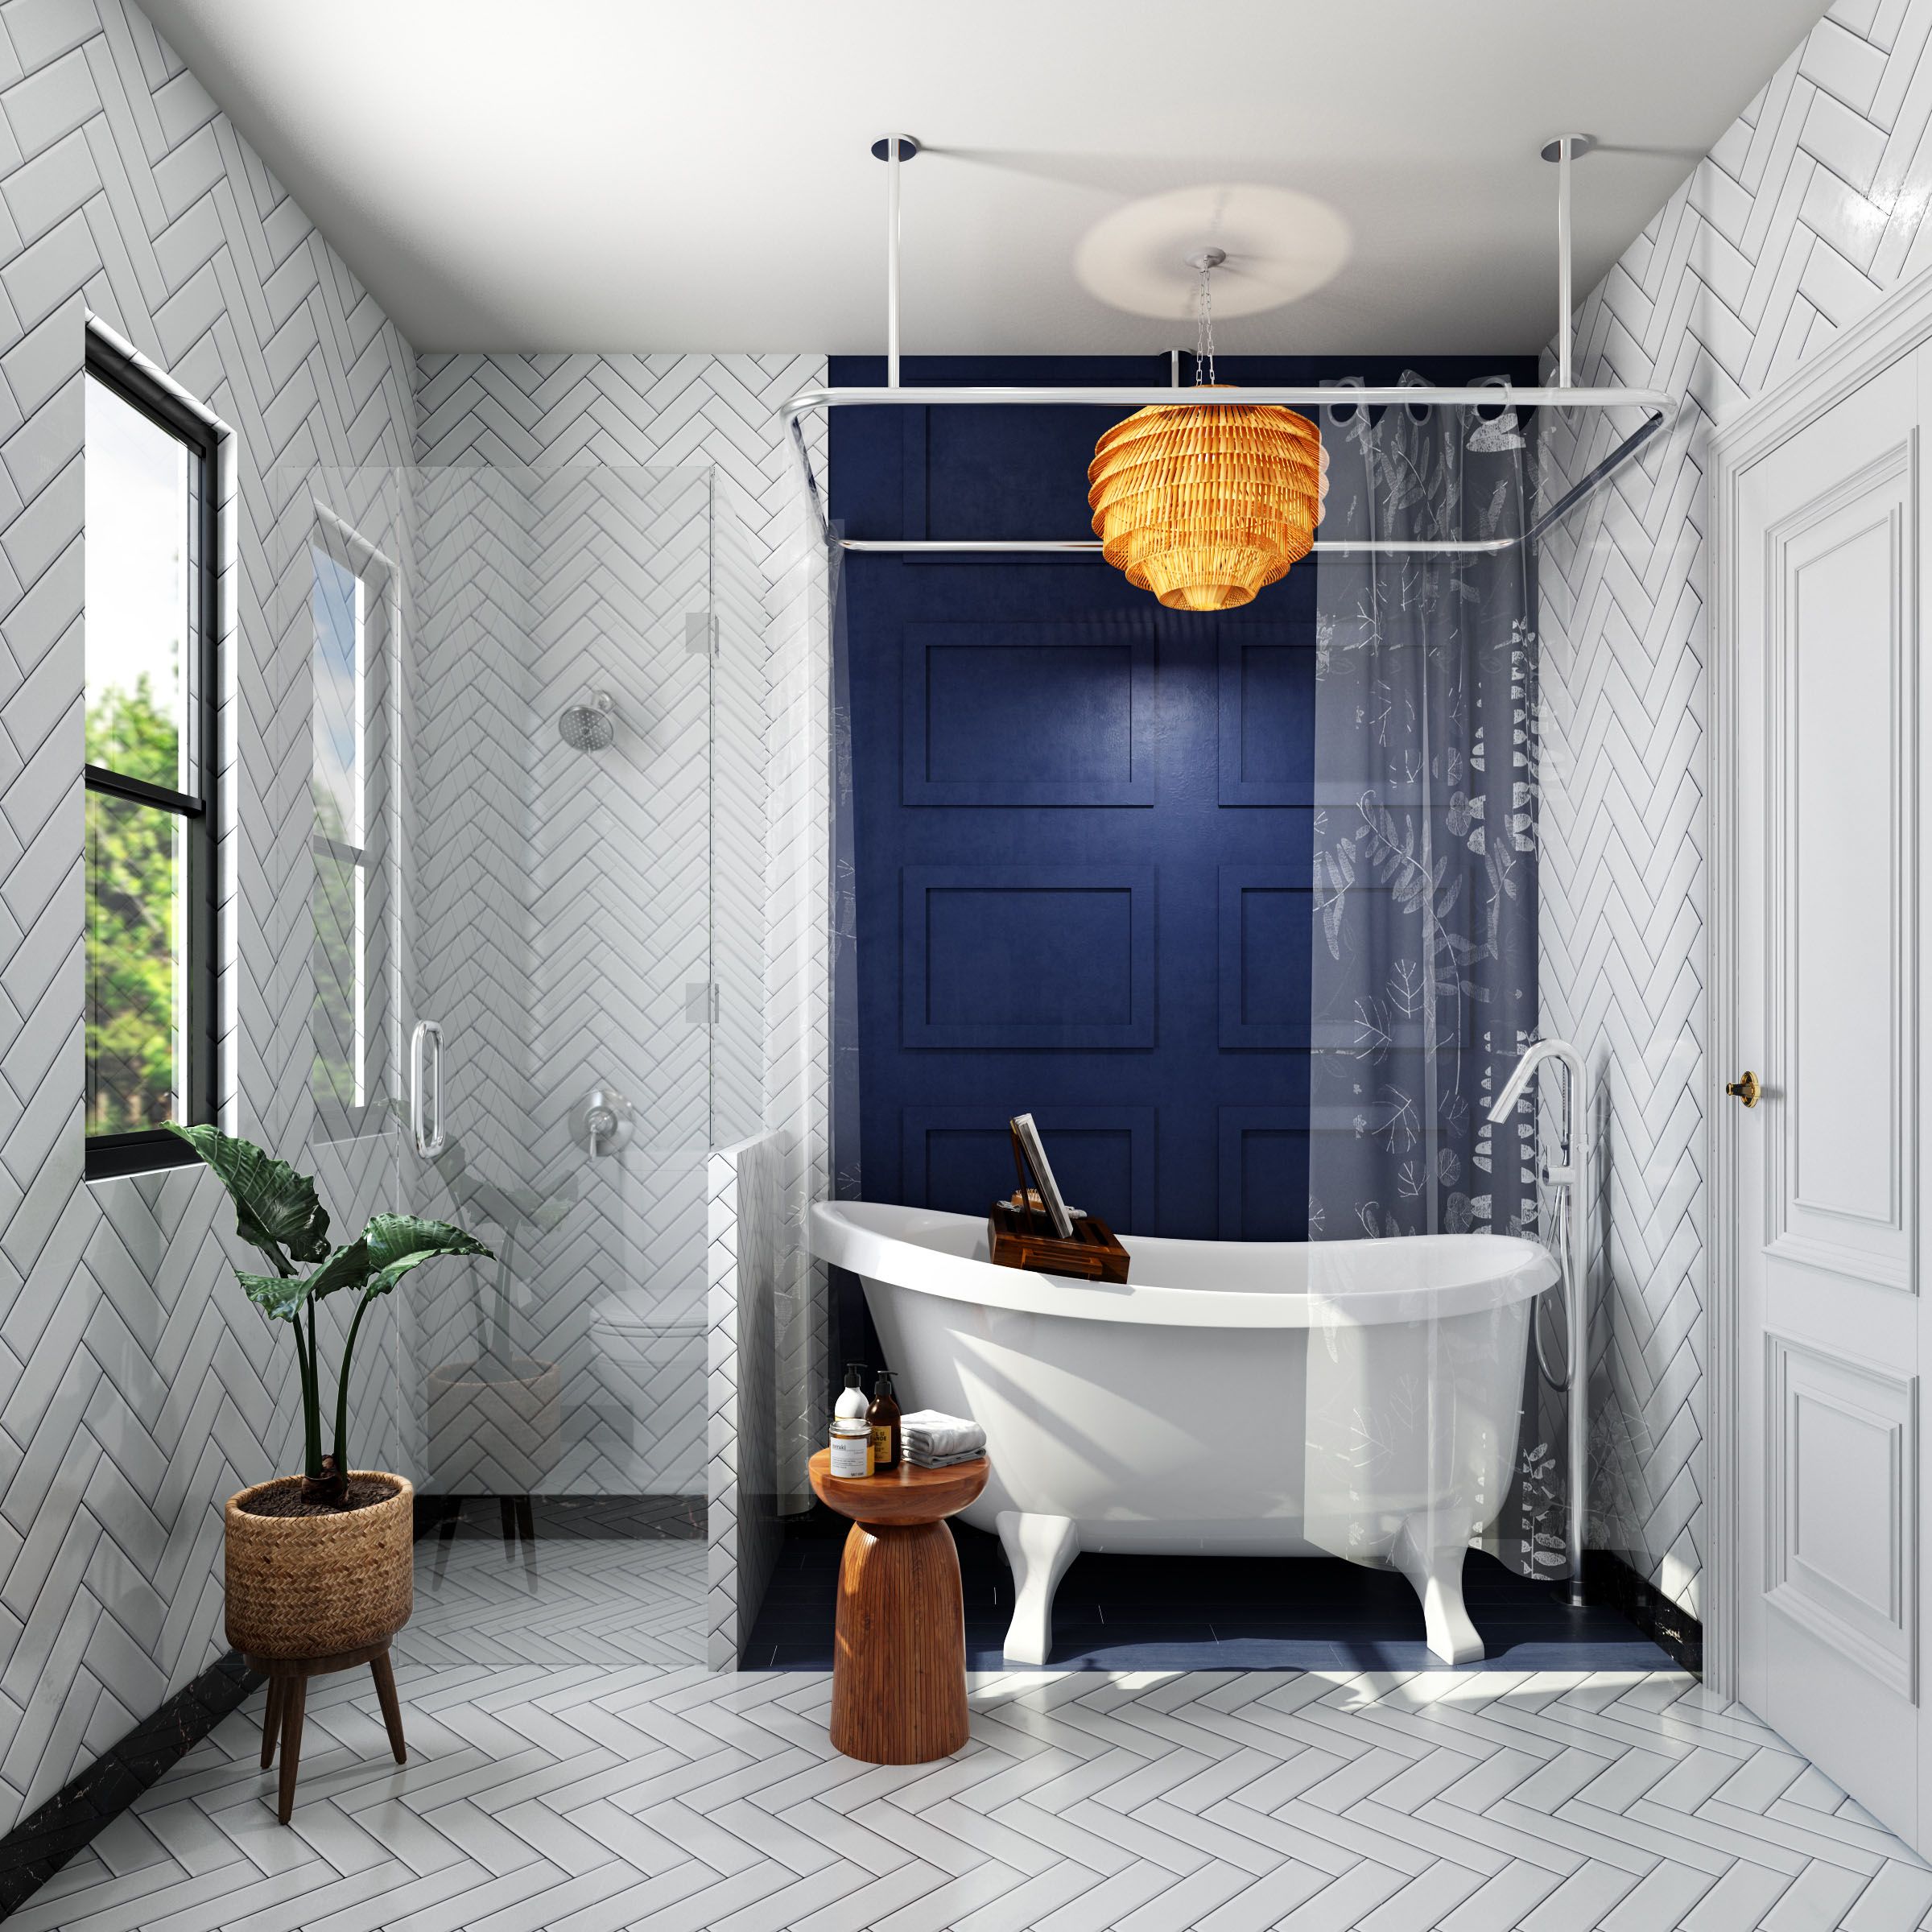 Ceramic White Bathroom Tile Design In Glossy Finish And Herringbone Pattern